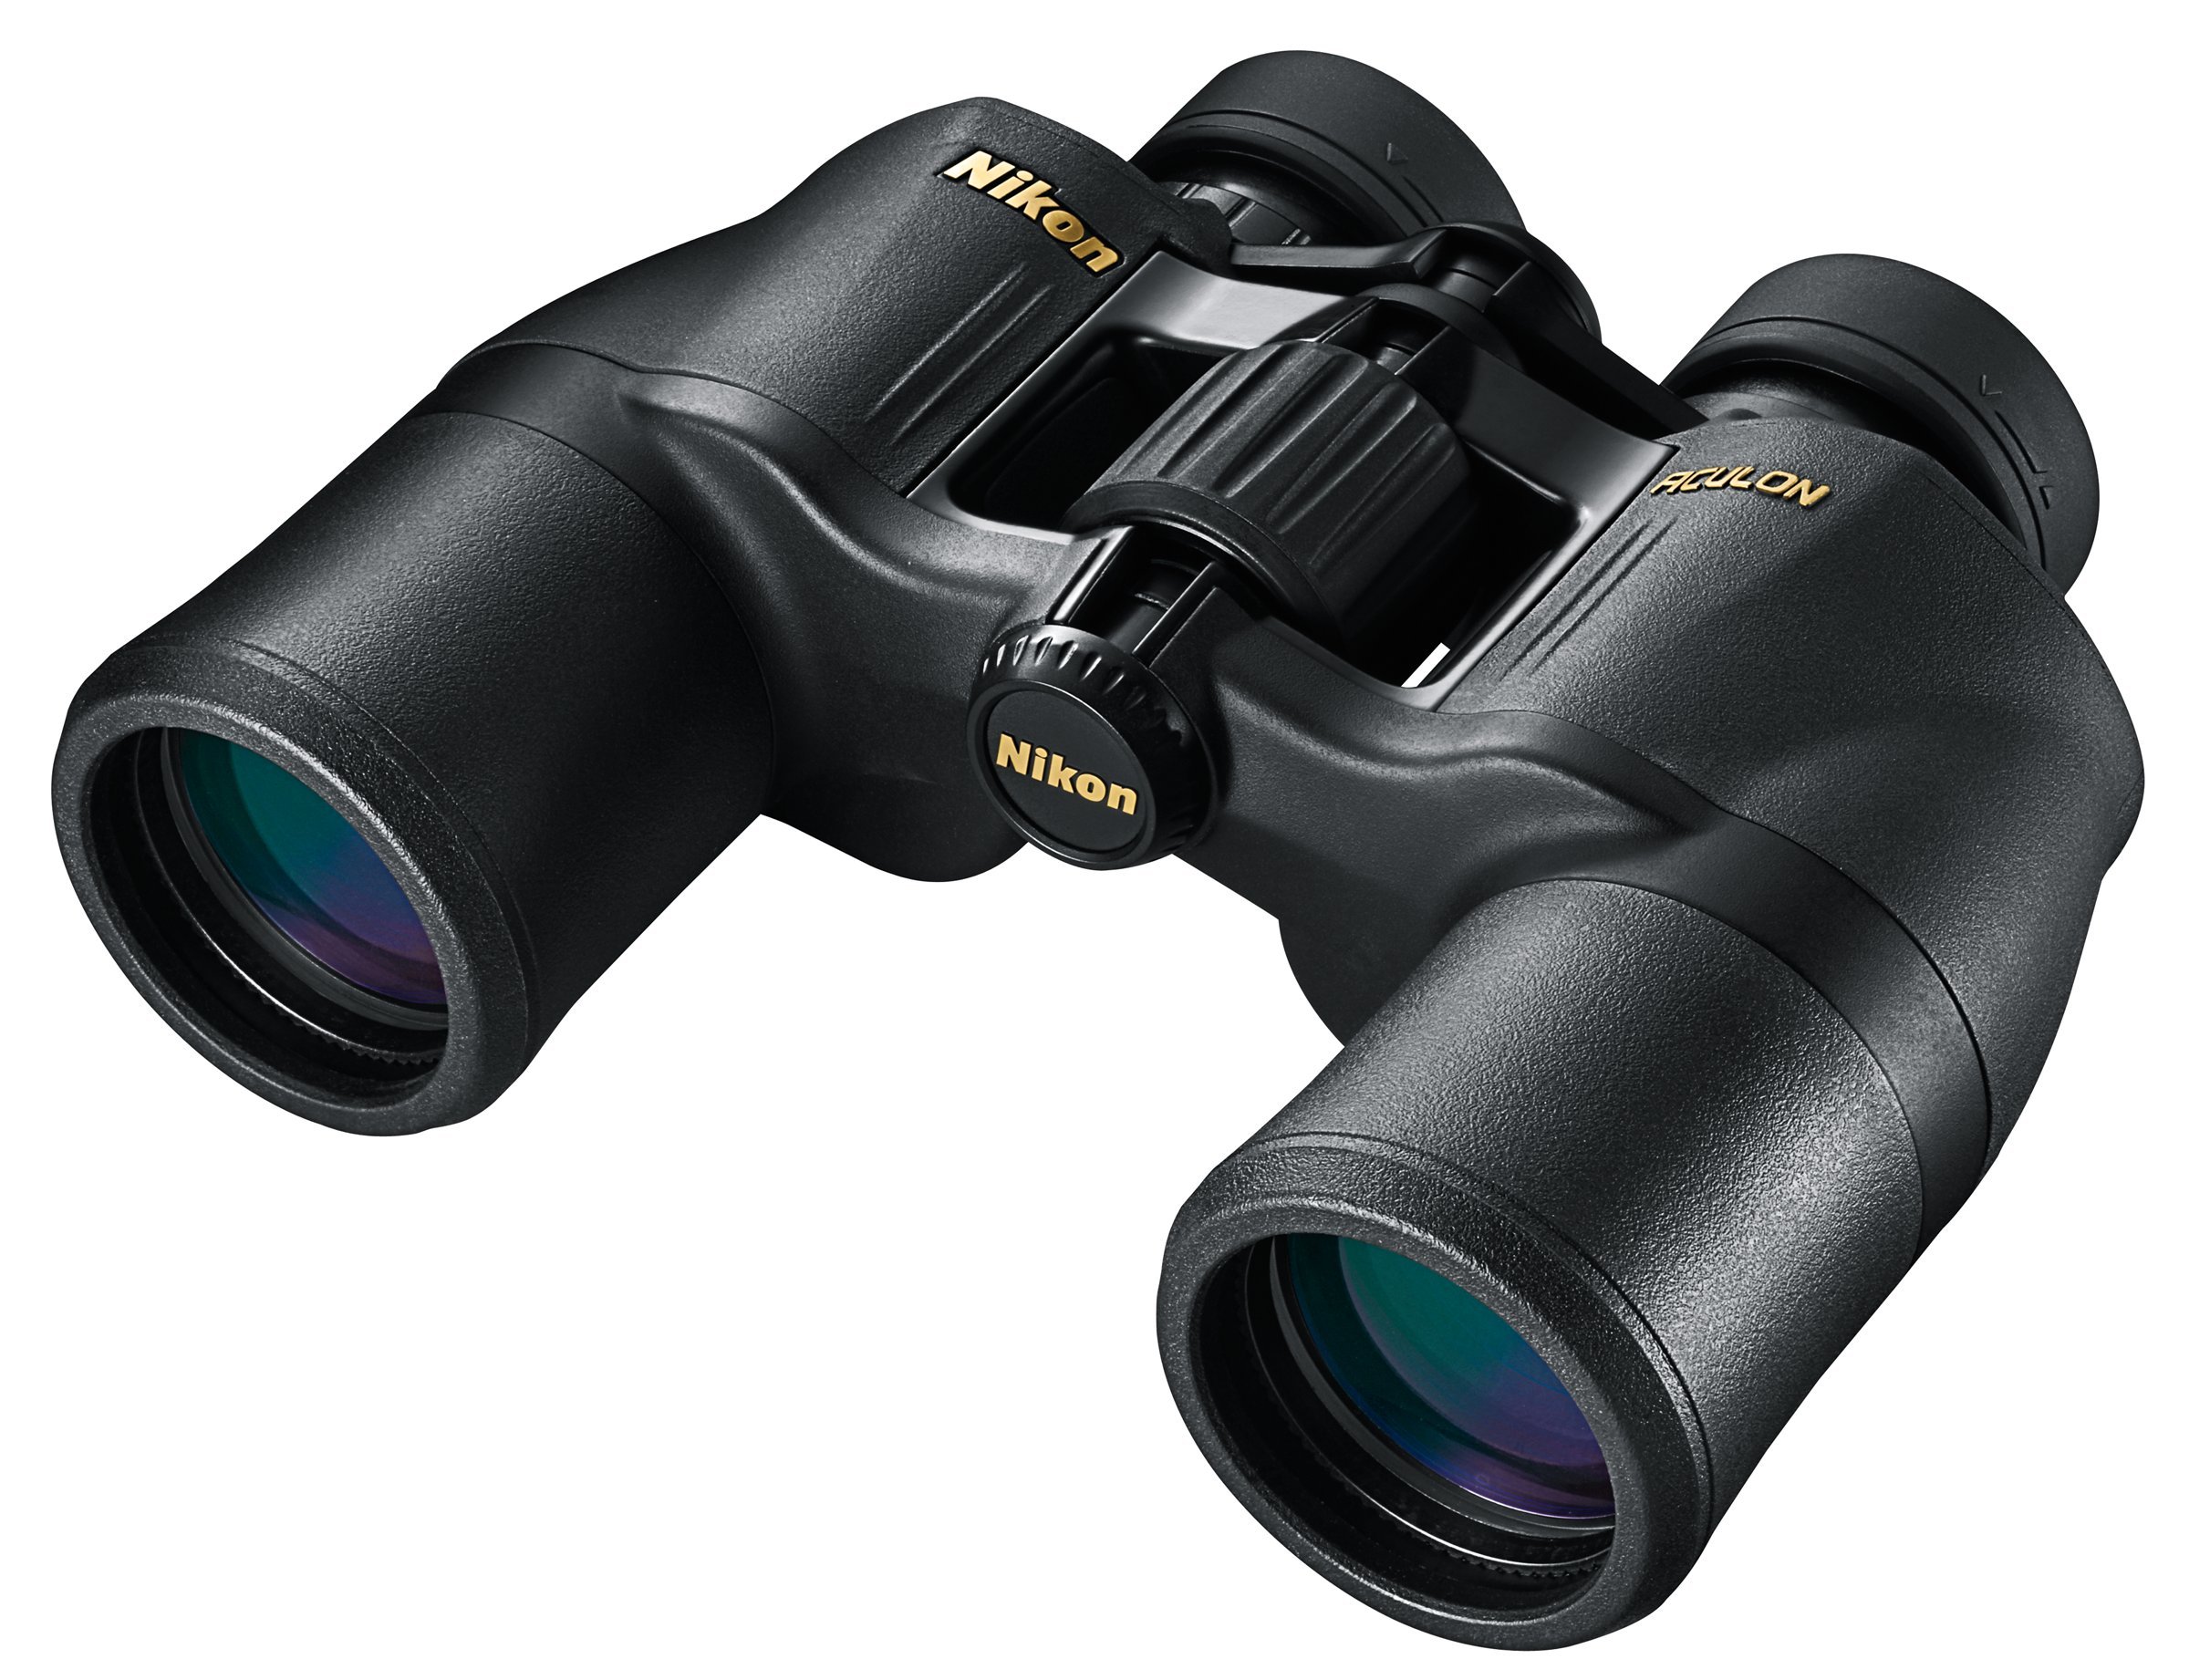 Nikon Aculon A211 8x42 Fernglas (8-fach, 42mm Frontlinsendurchmesser) schwarz